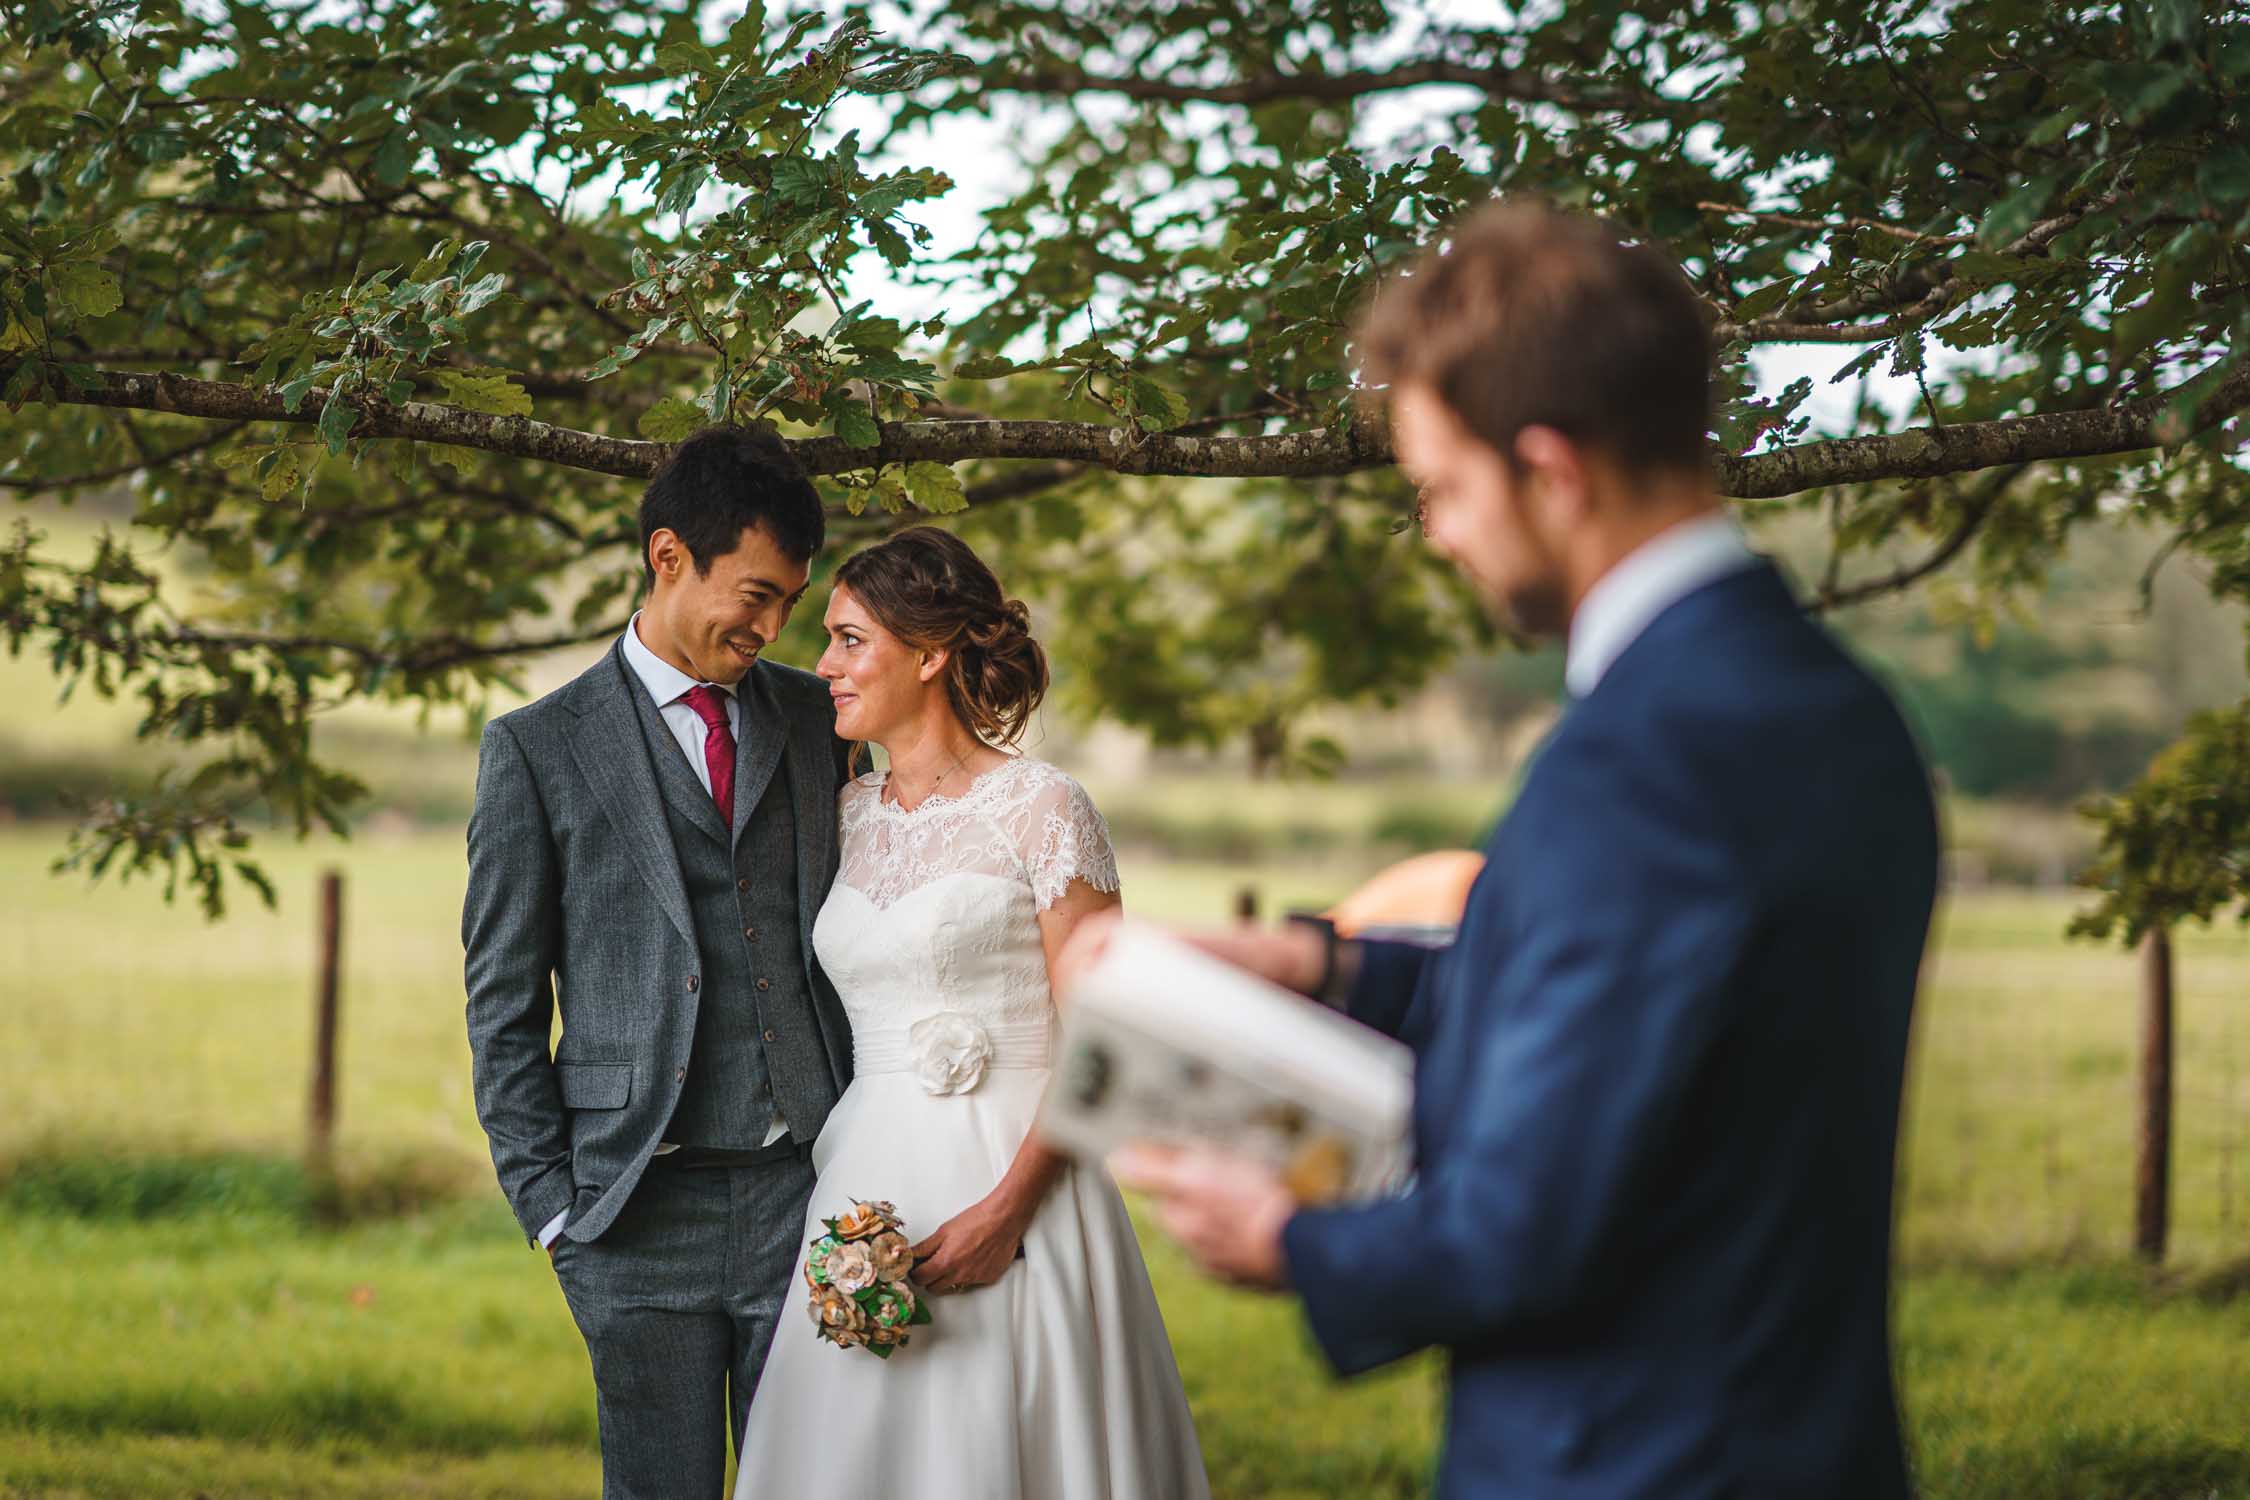 Lower House Farm Wedding Photography, Bespoke By Nature Wedding, Herefordshire Wedding Venue, Outdoor Country Wedding, Longtown Wedding, Wedding Photographers in Herefordshire